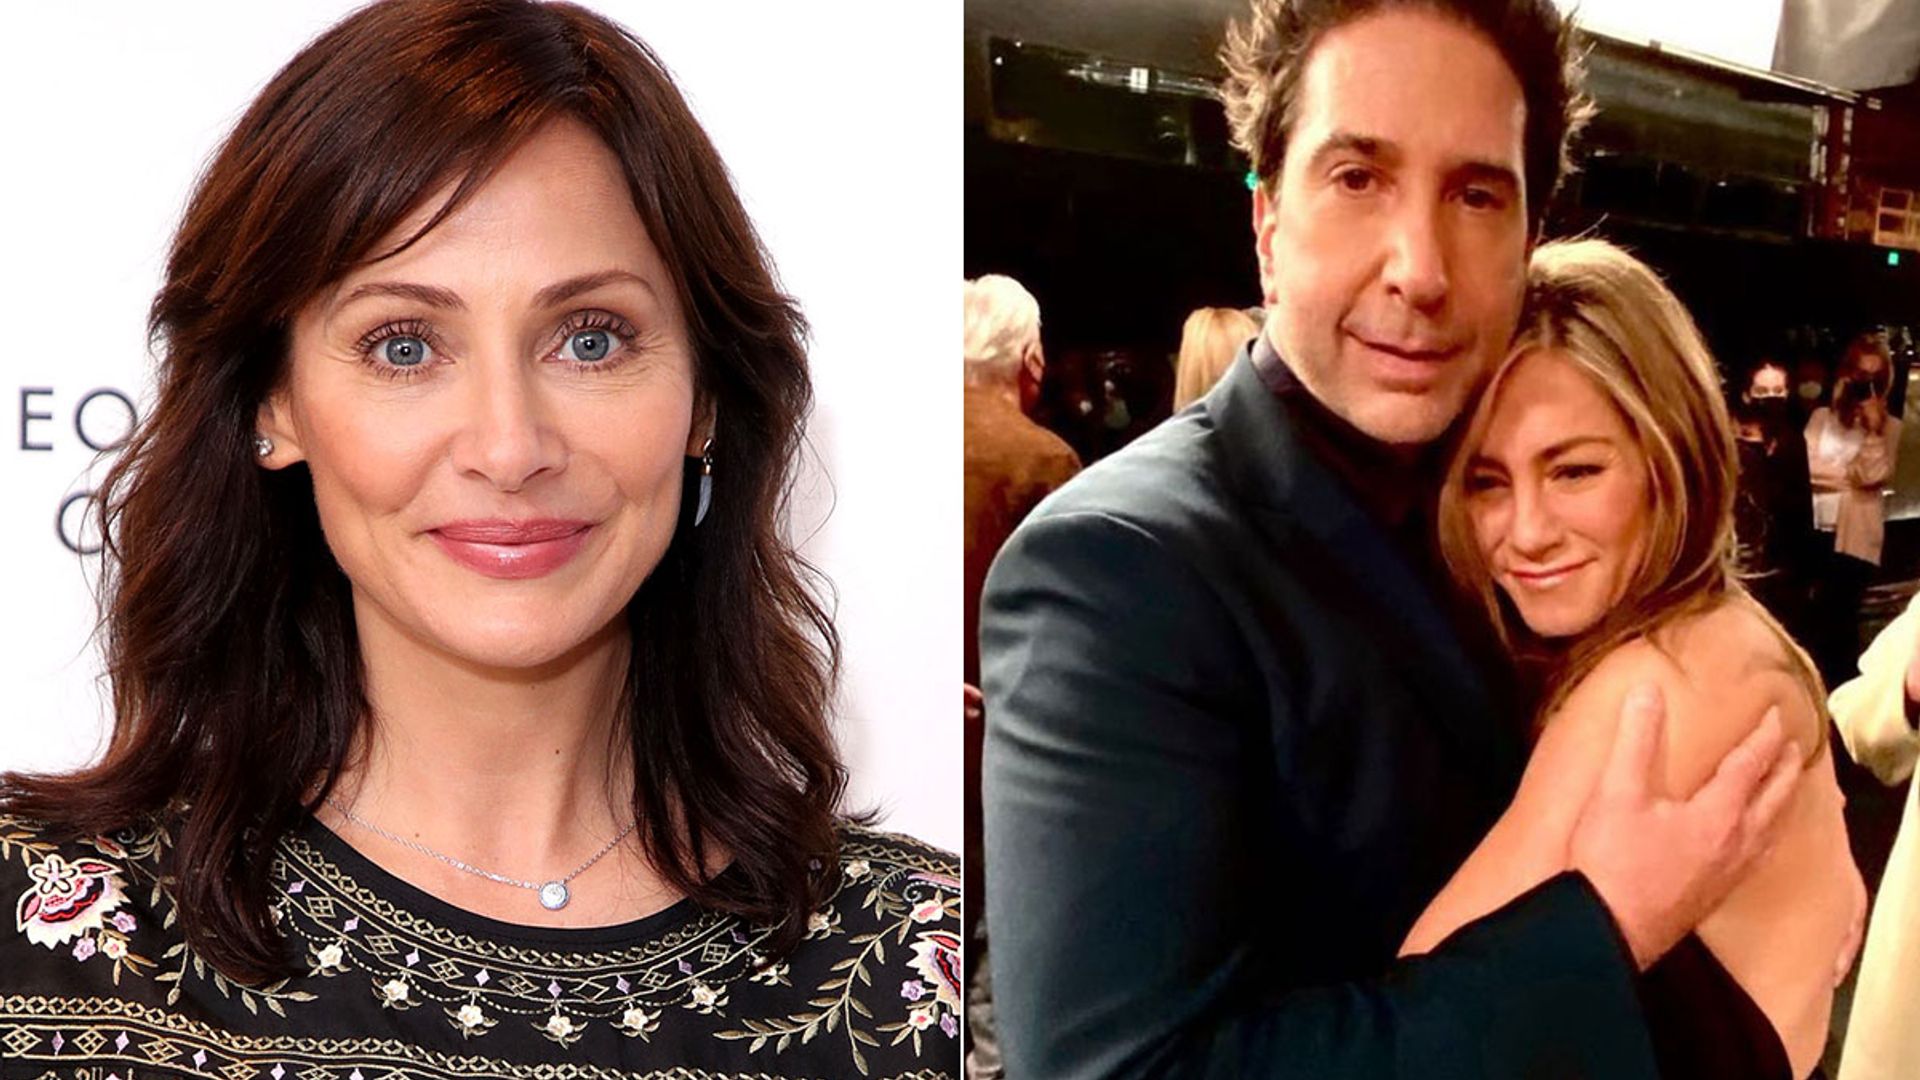 Natalie Imbruglia reacts to ex David Schwimmer's shock 'crush' on Jennifer Aniston